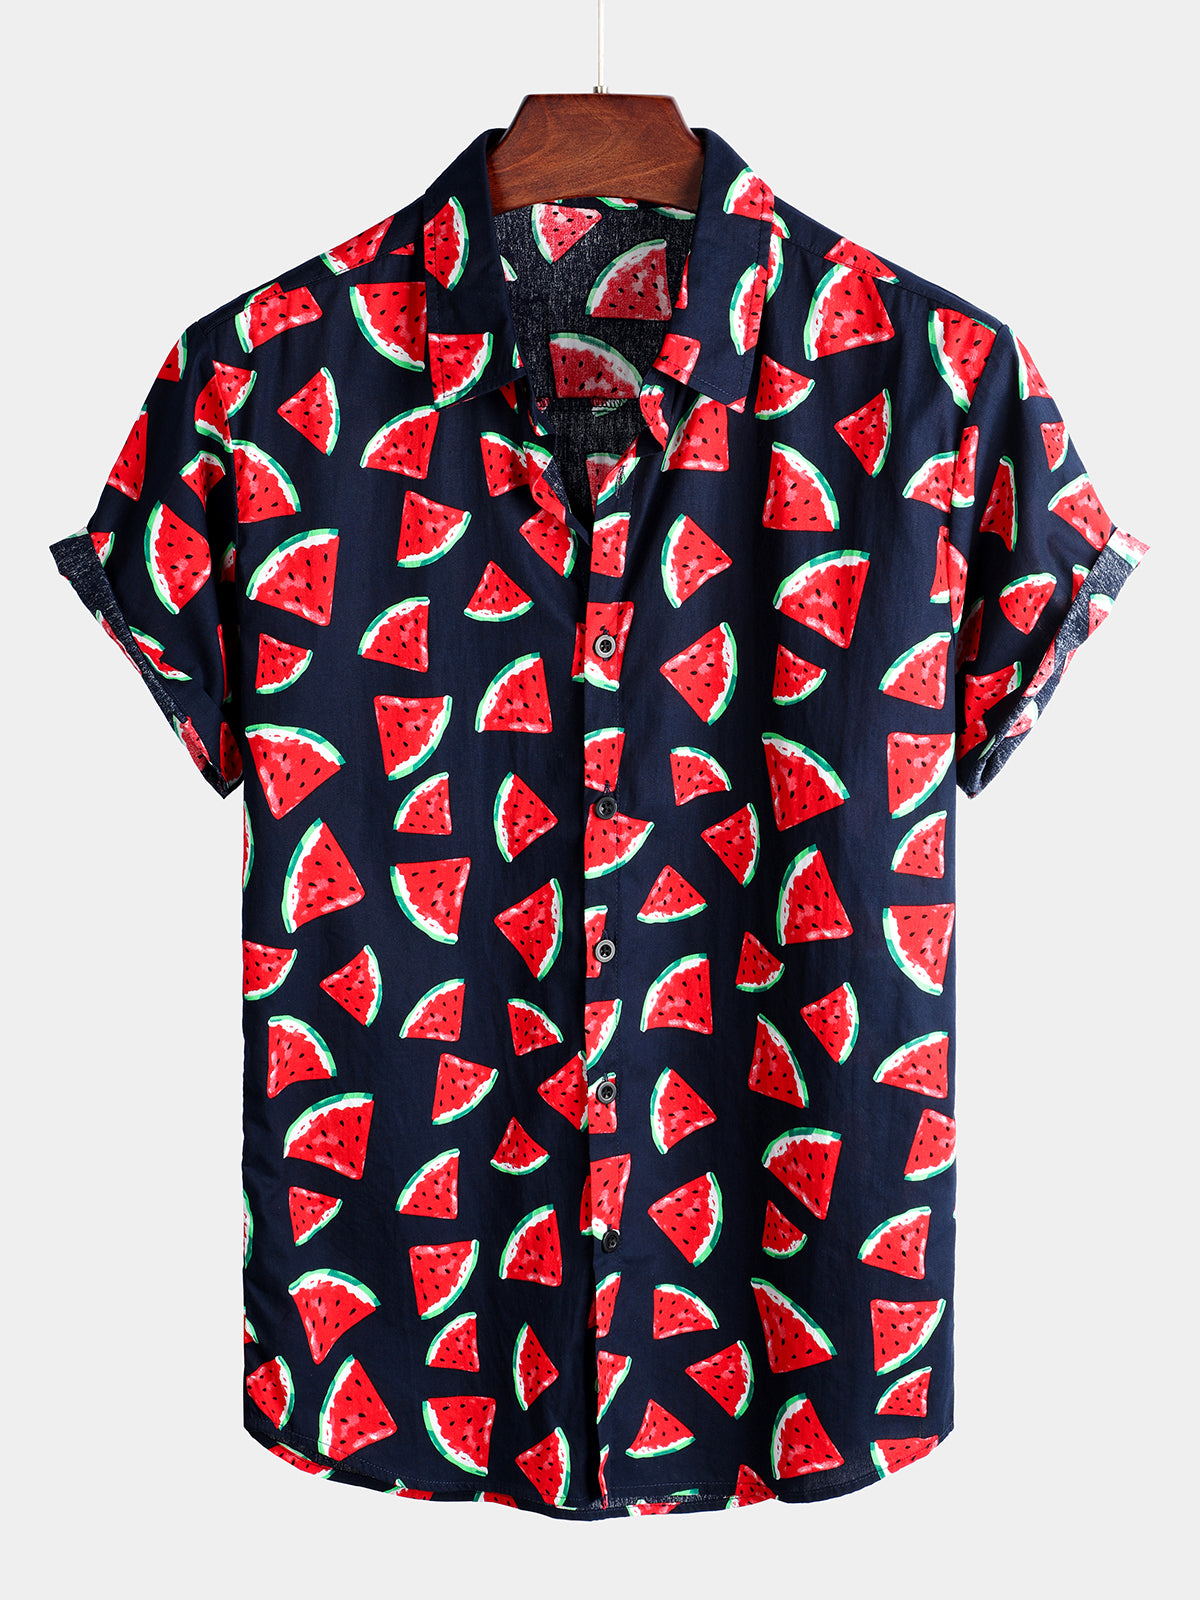 Men's Watermelon Tropical Hawaii Fruit Print Cotton Navy Blue Shirt